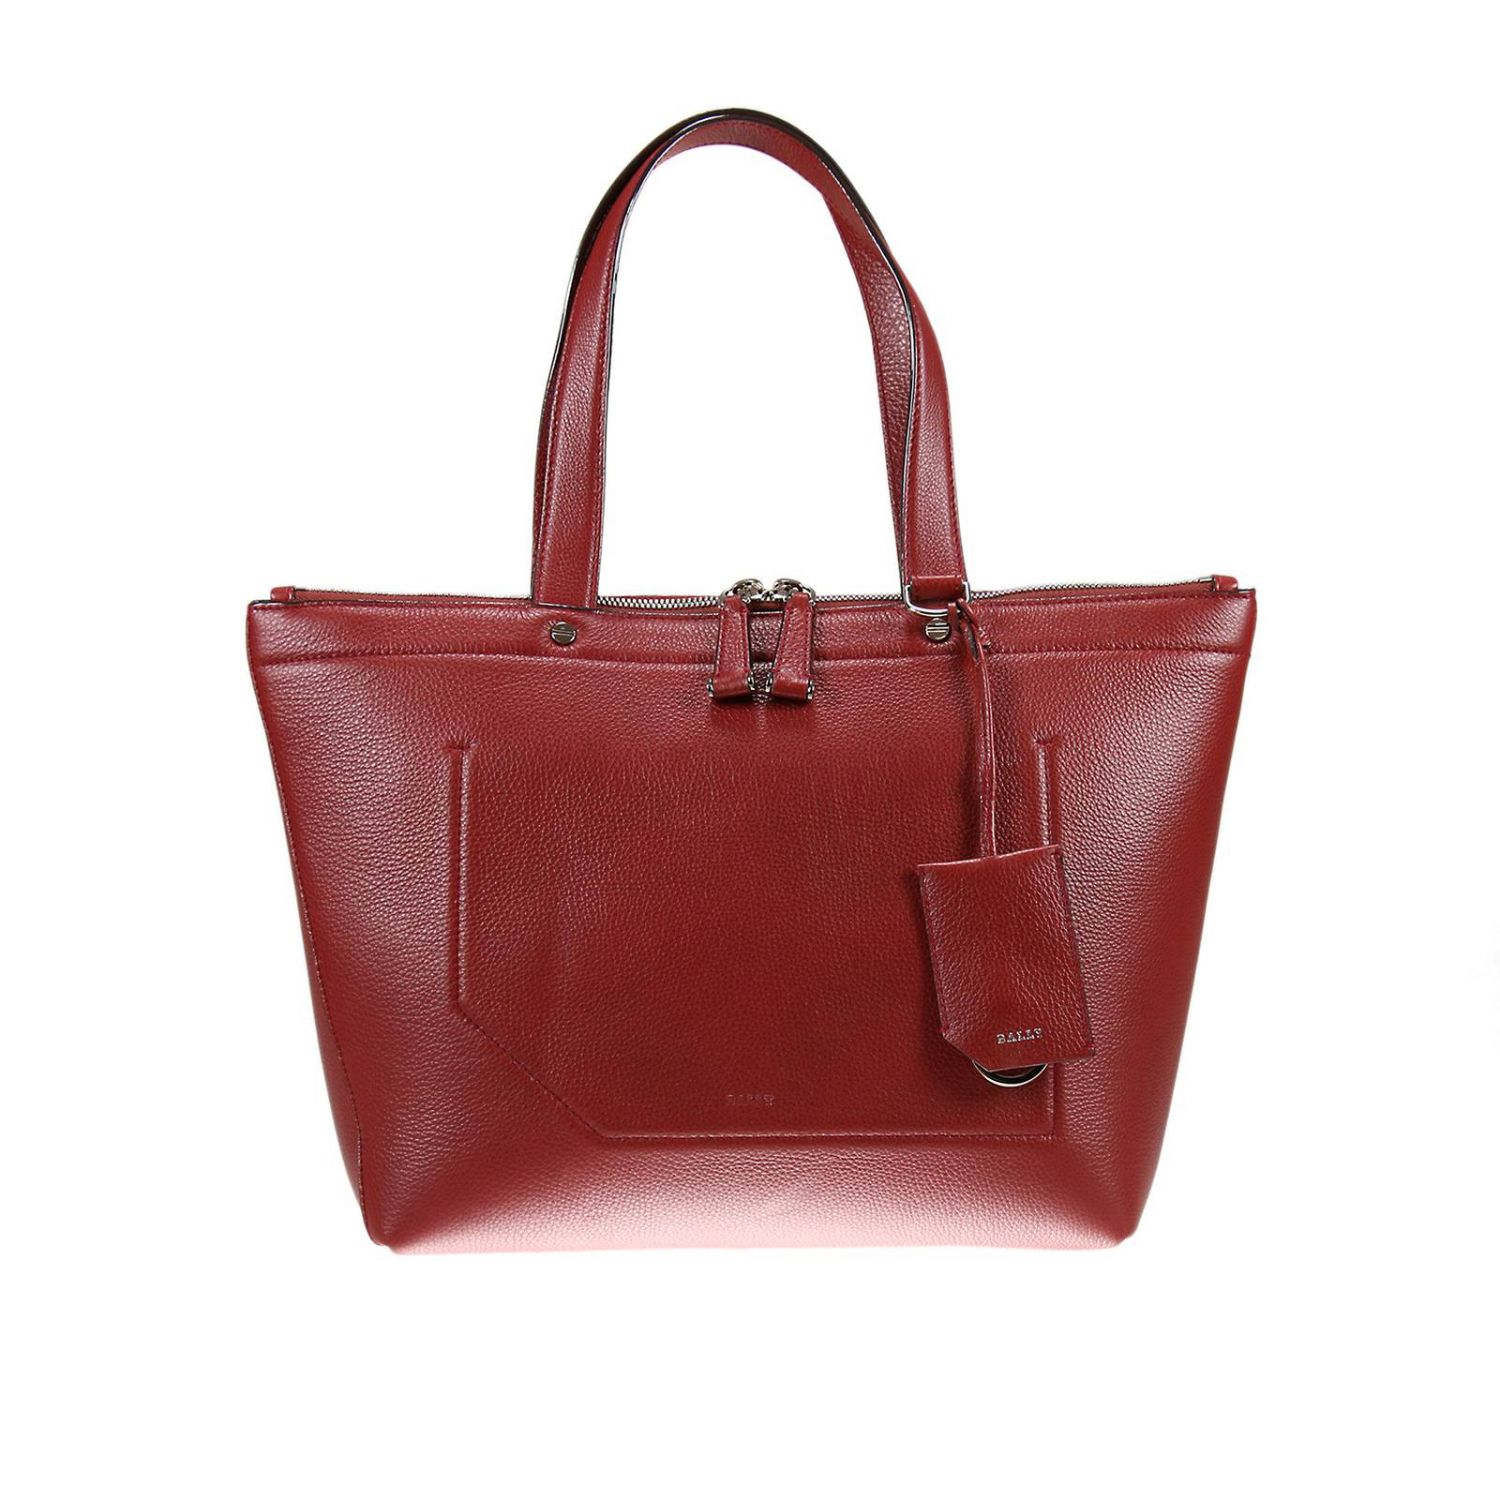 Lyst - Bally Shoulder Bag Handbag Woman in Red